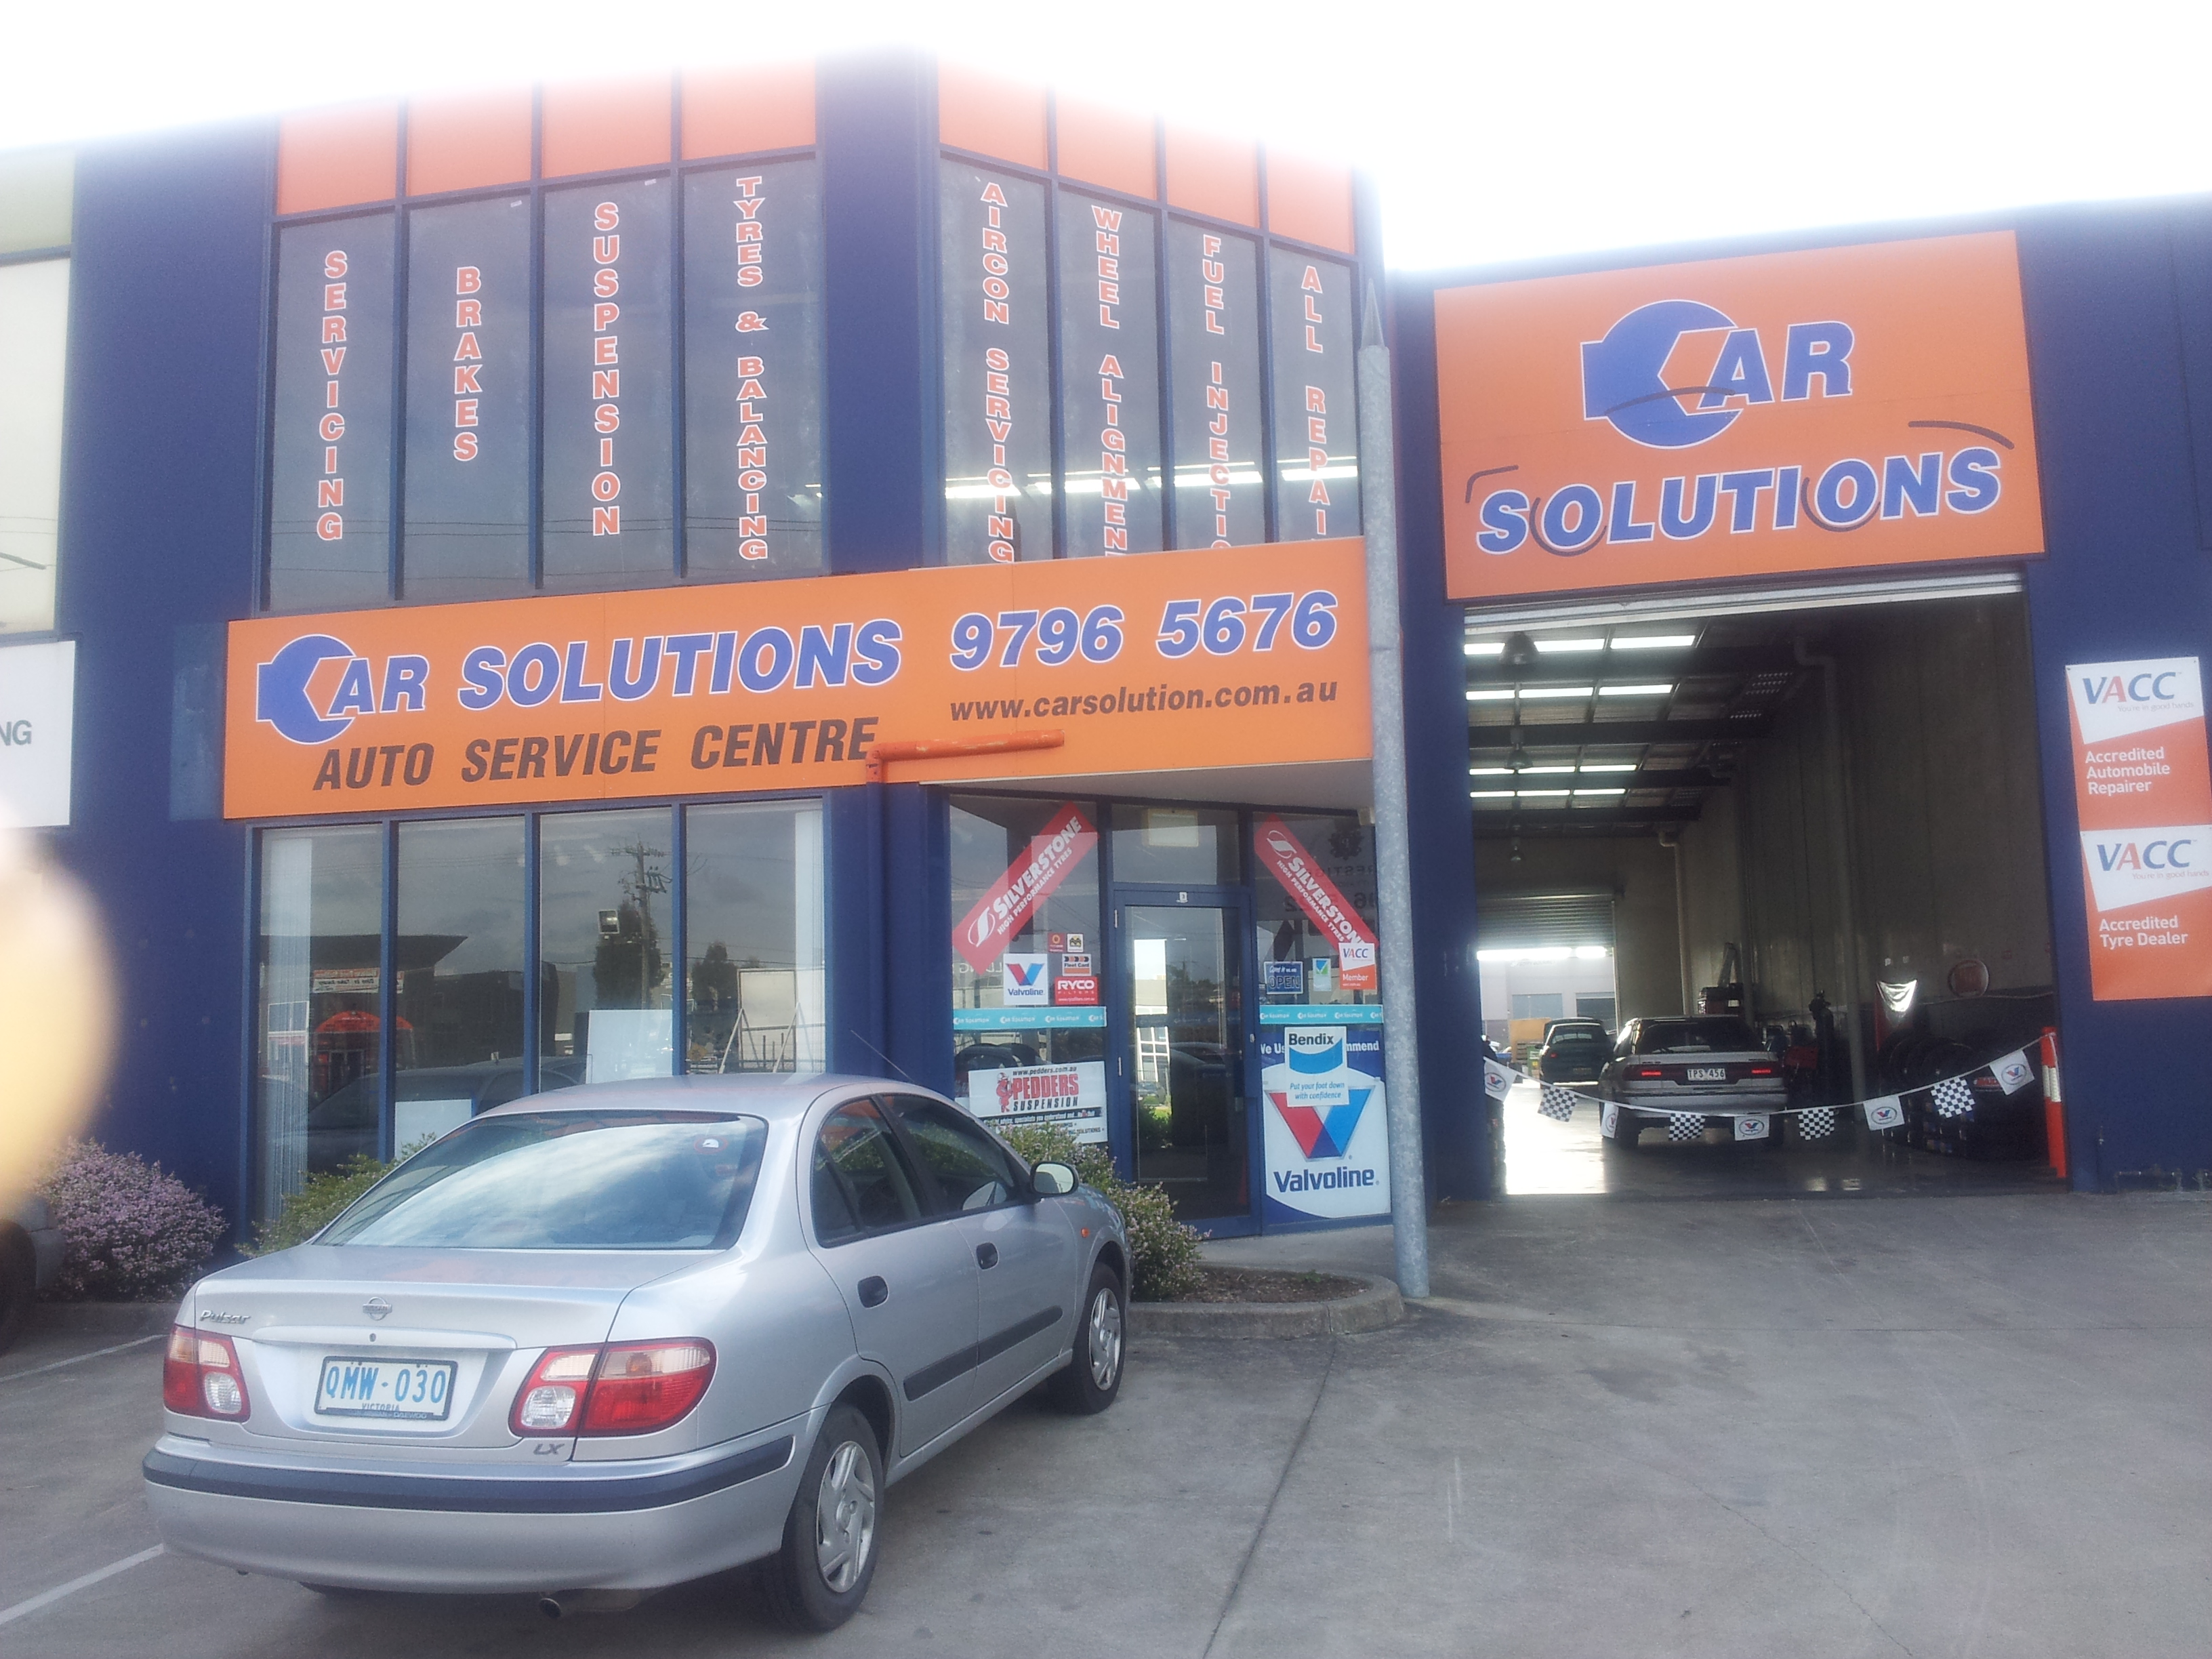 Car Solutions Services Pty Ltd